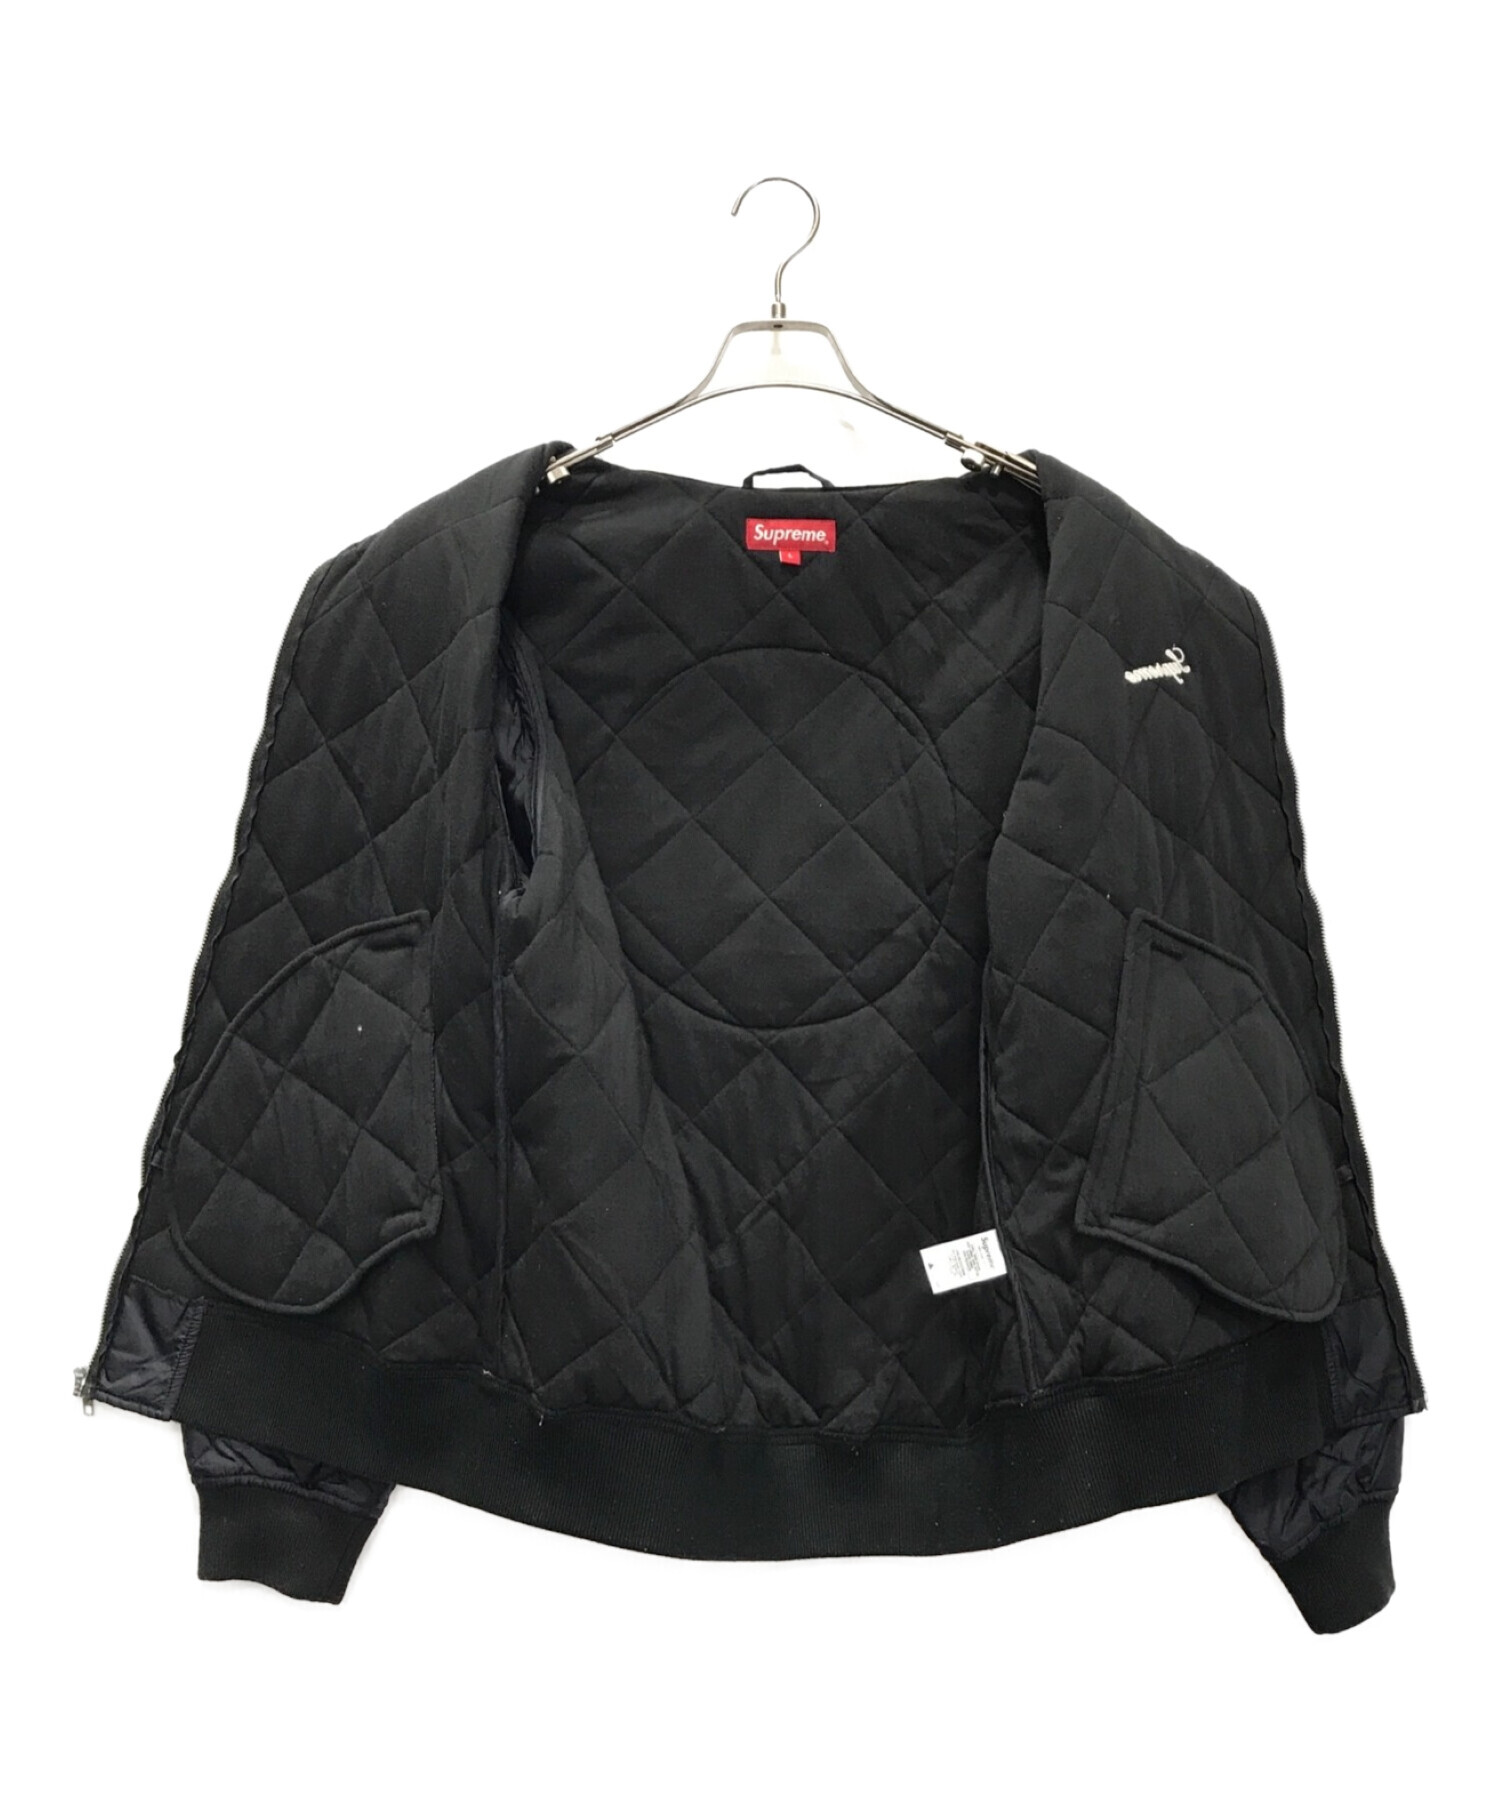 Supreme (シュプリーム) スパンコールキルティングジャケット ブラック サイズ:L